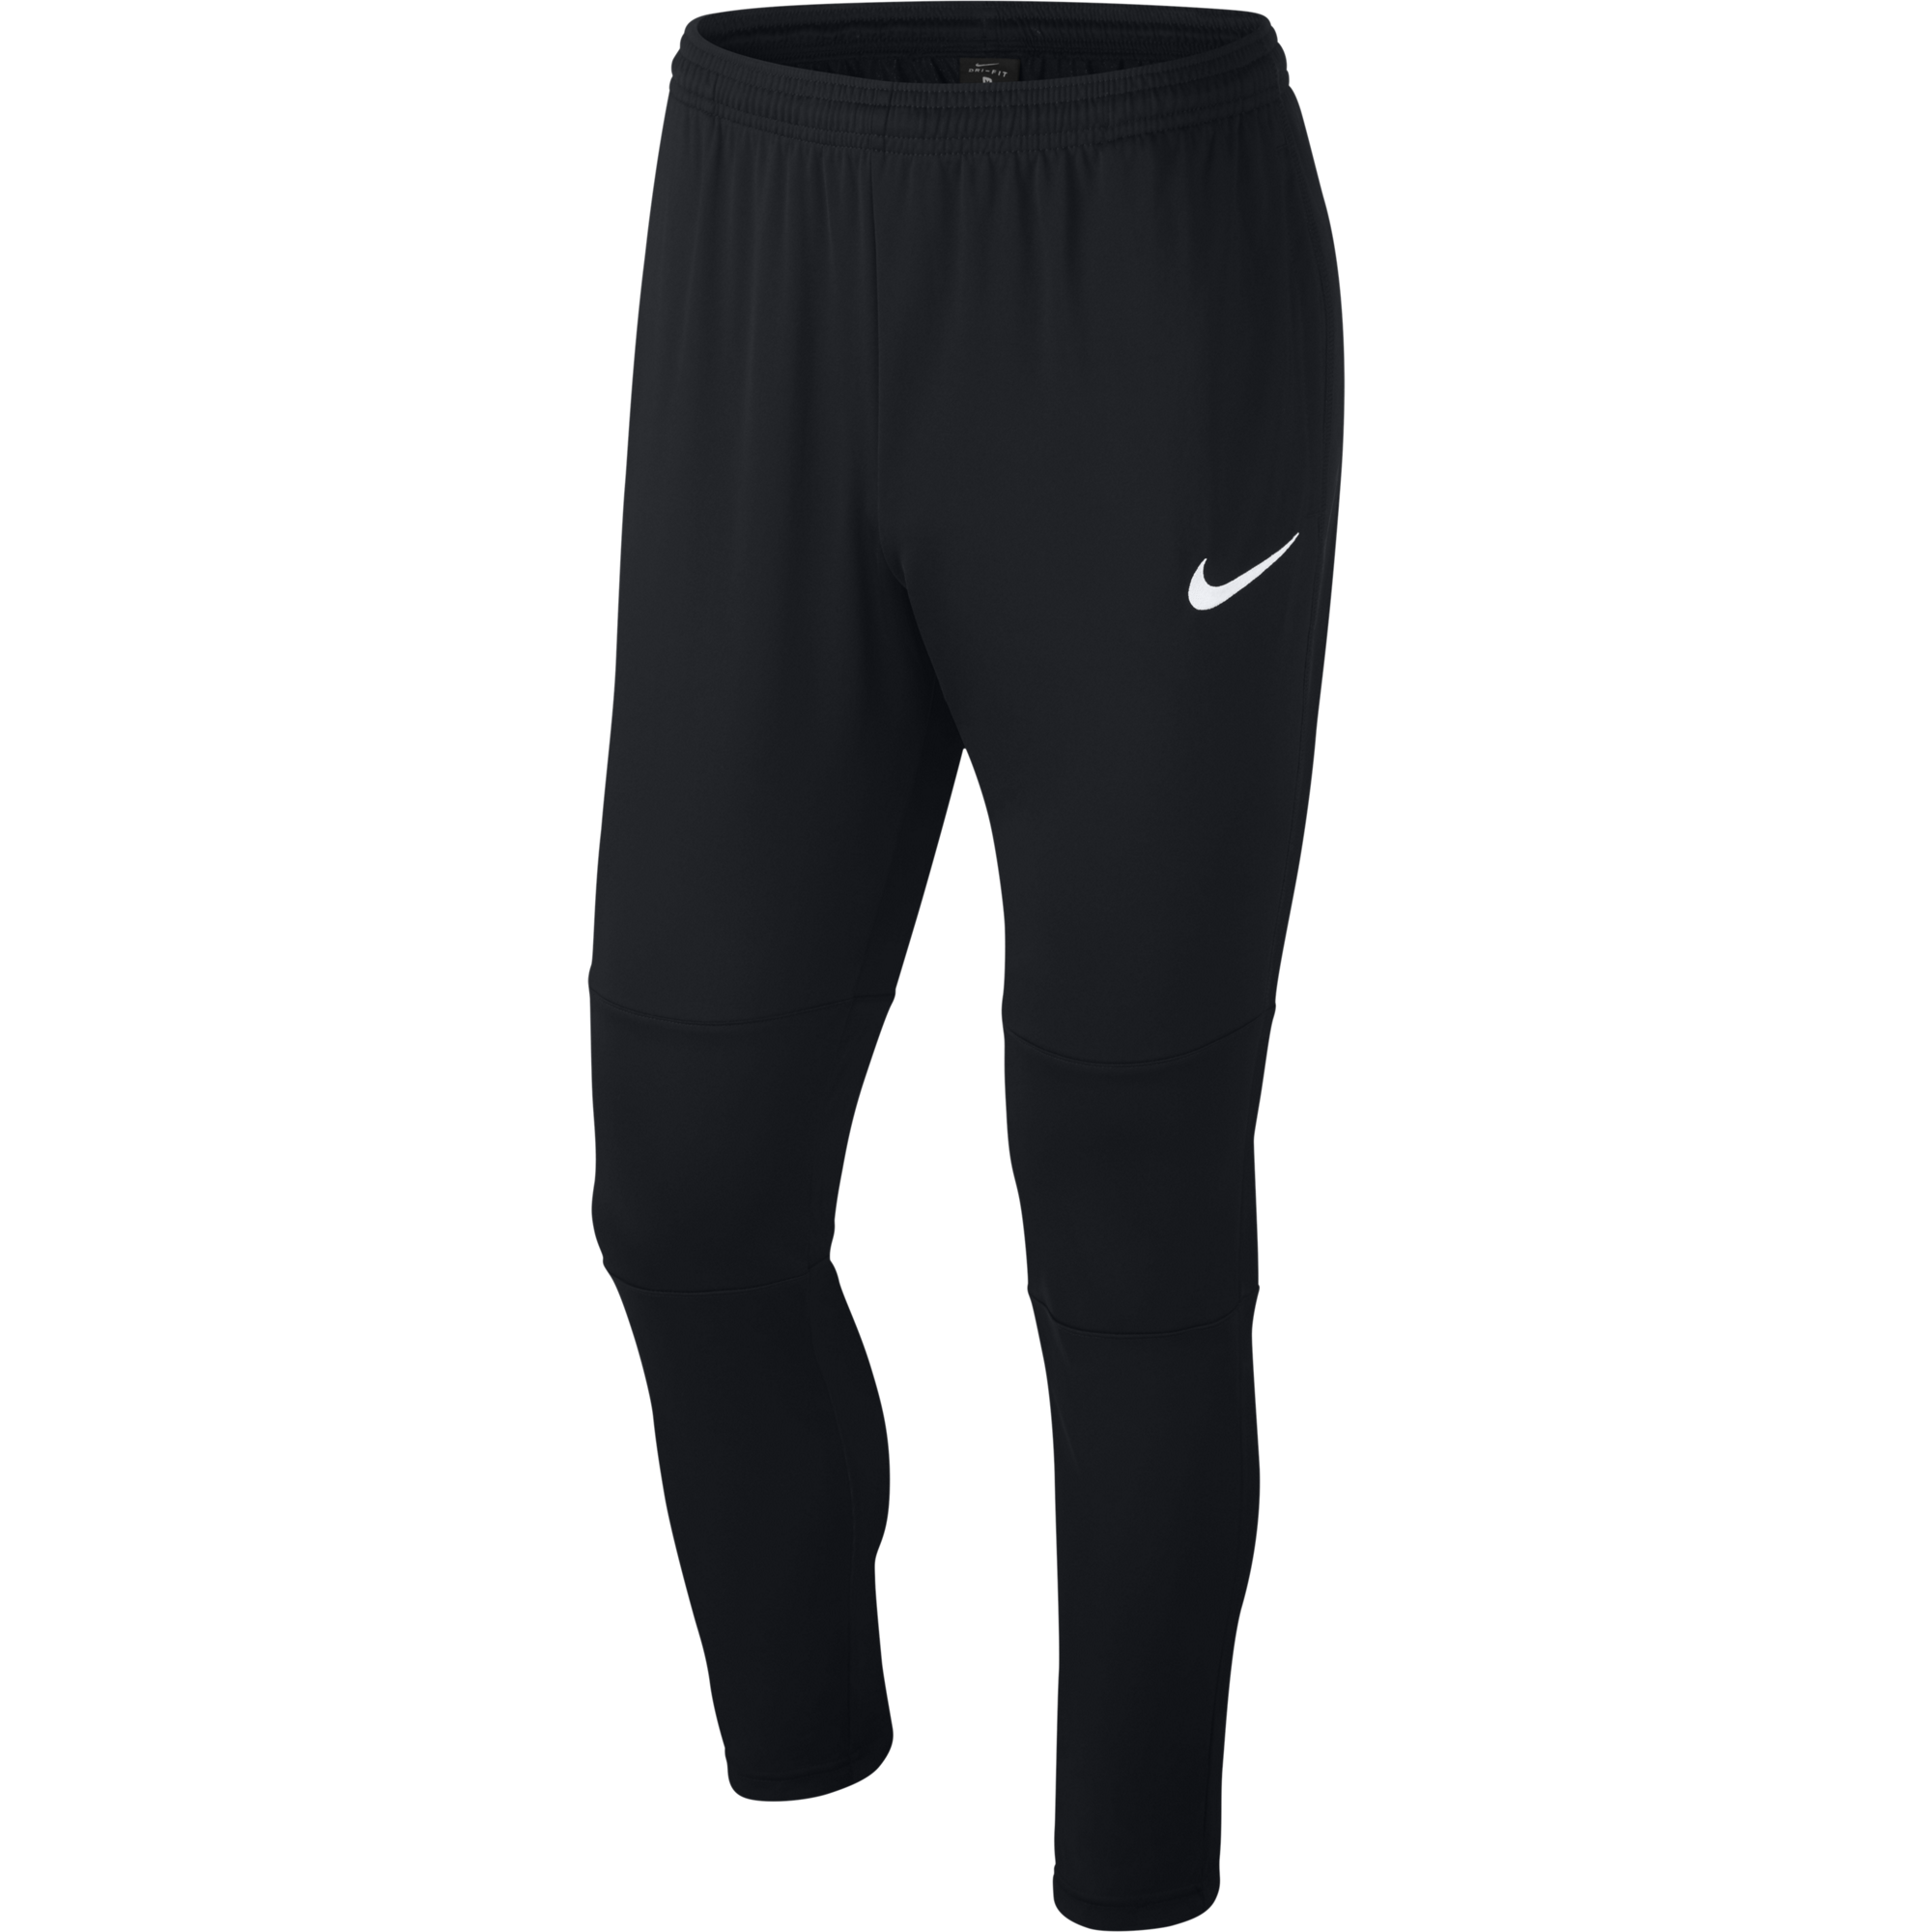 Team Cobras Boxing Club - Nike Park Knit Pants, Black, Adults. - Fanatics Supplies